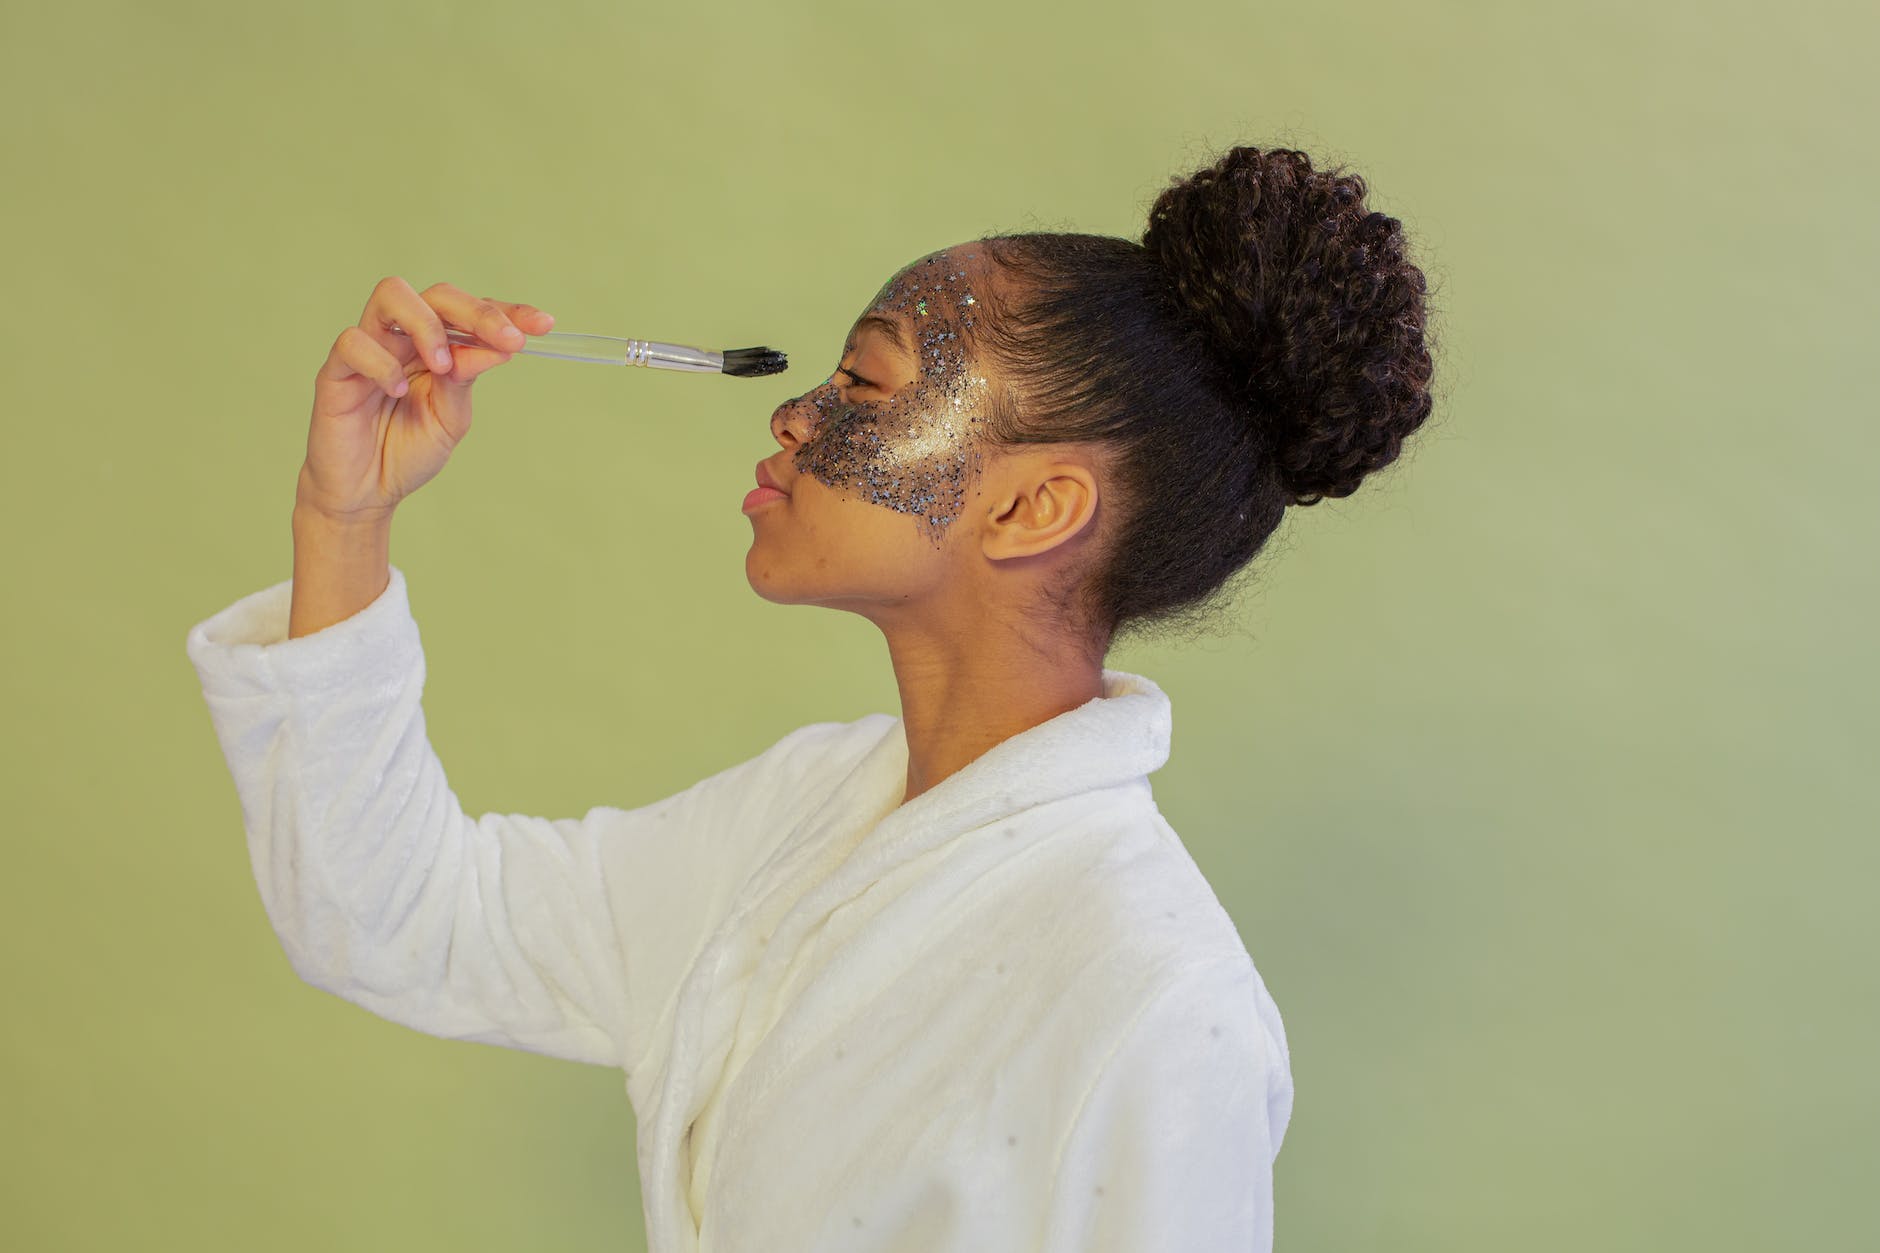 black woman applying facial mask with brush